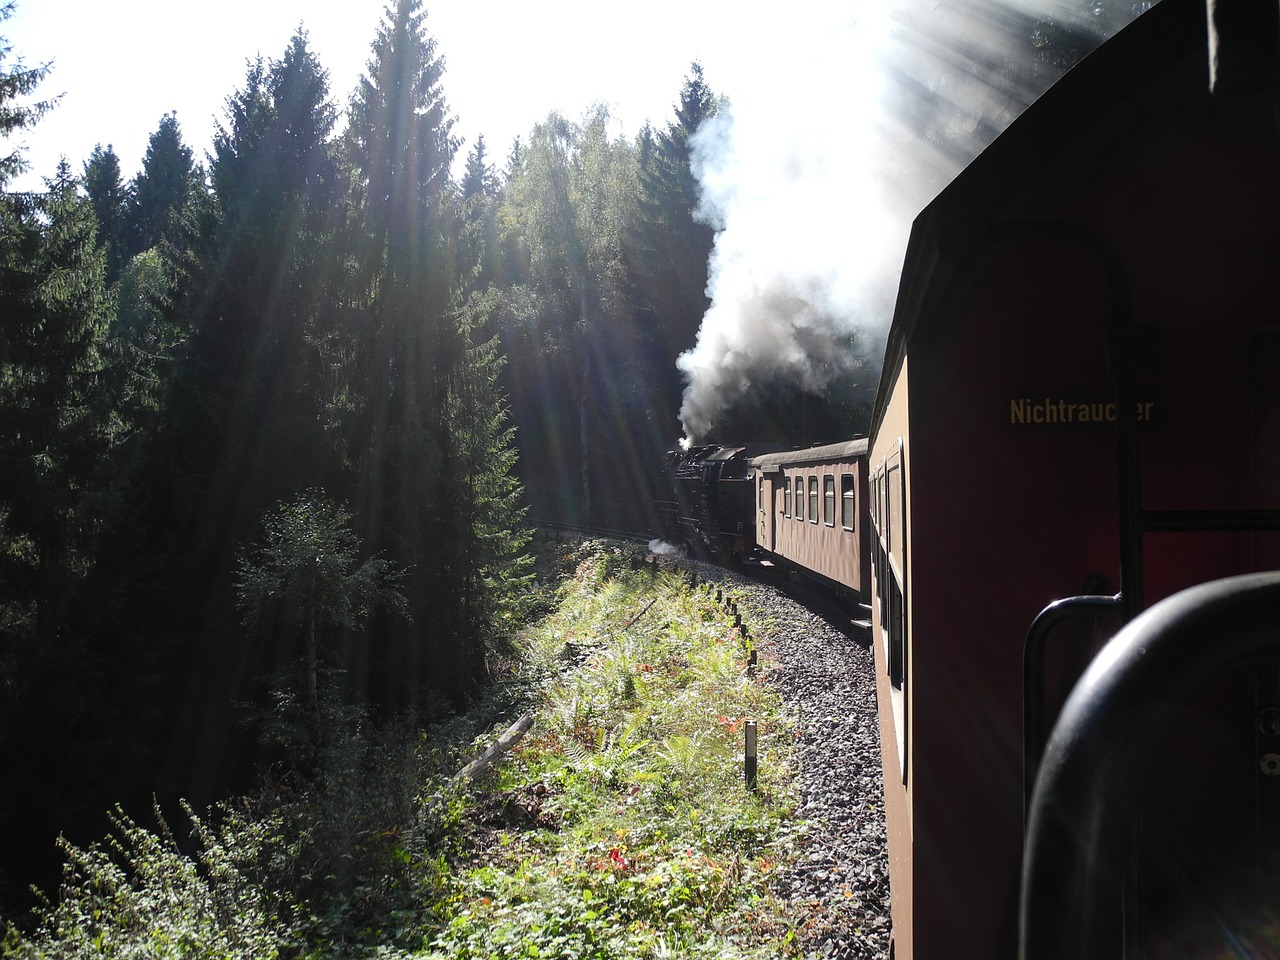 loco steam locomotive train free photo